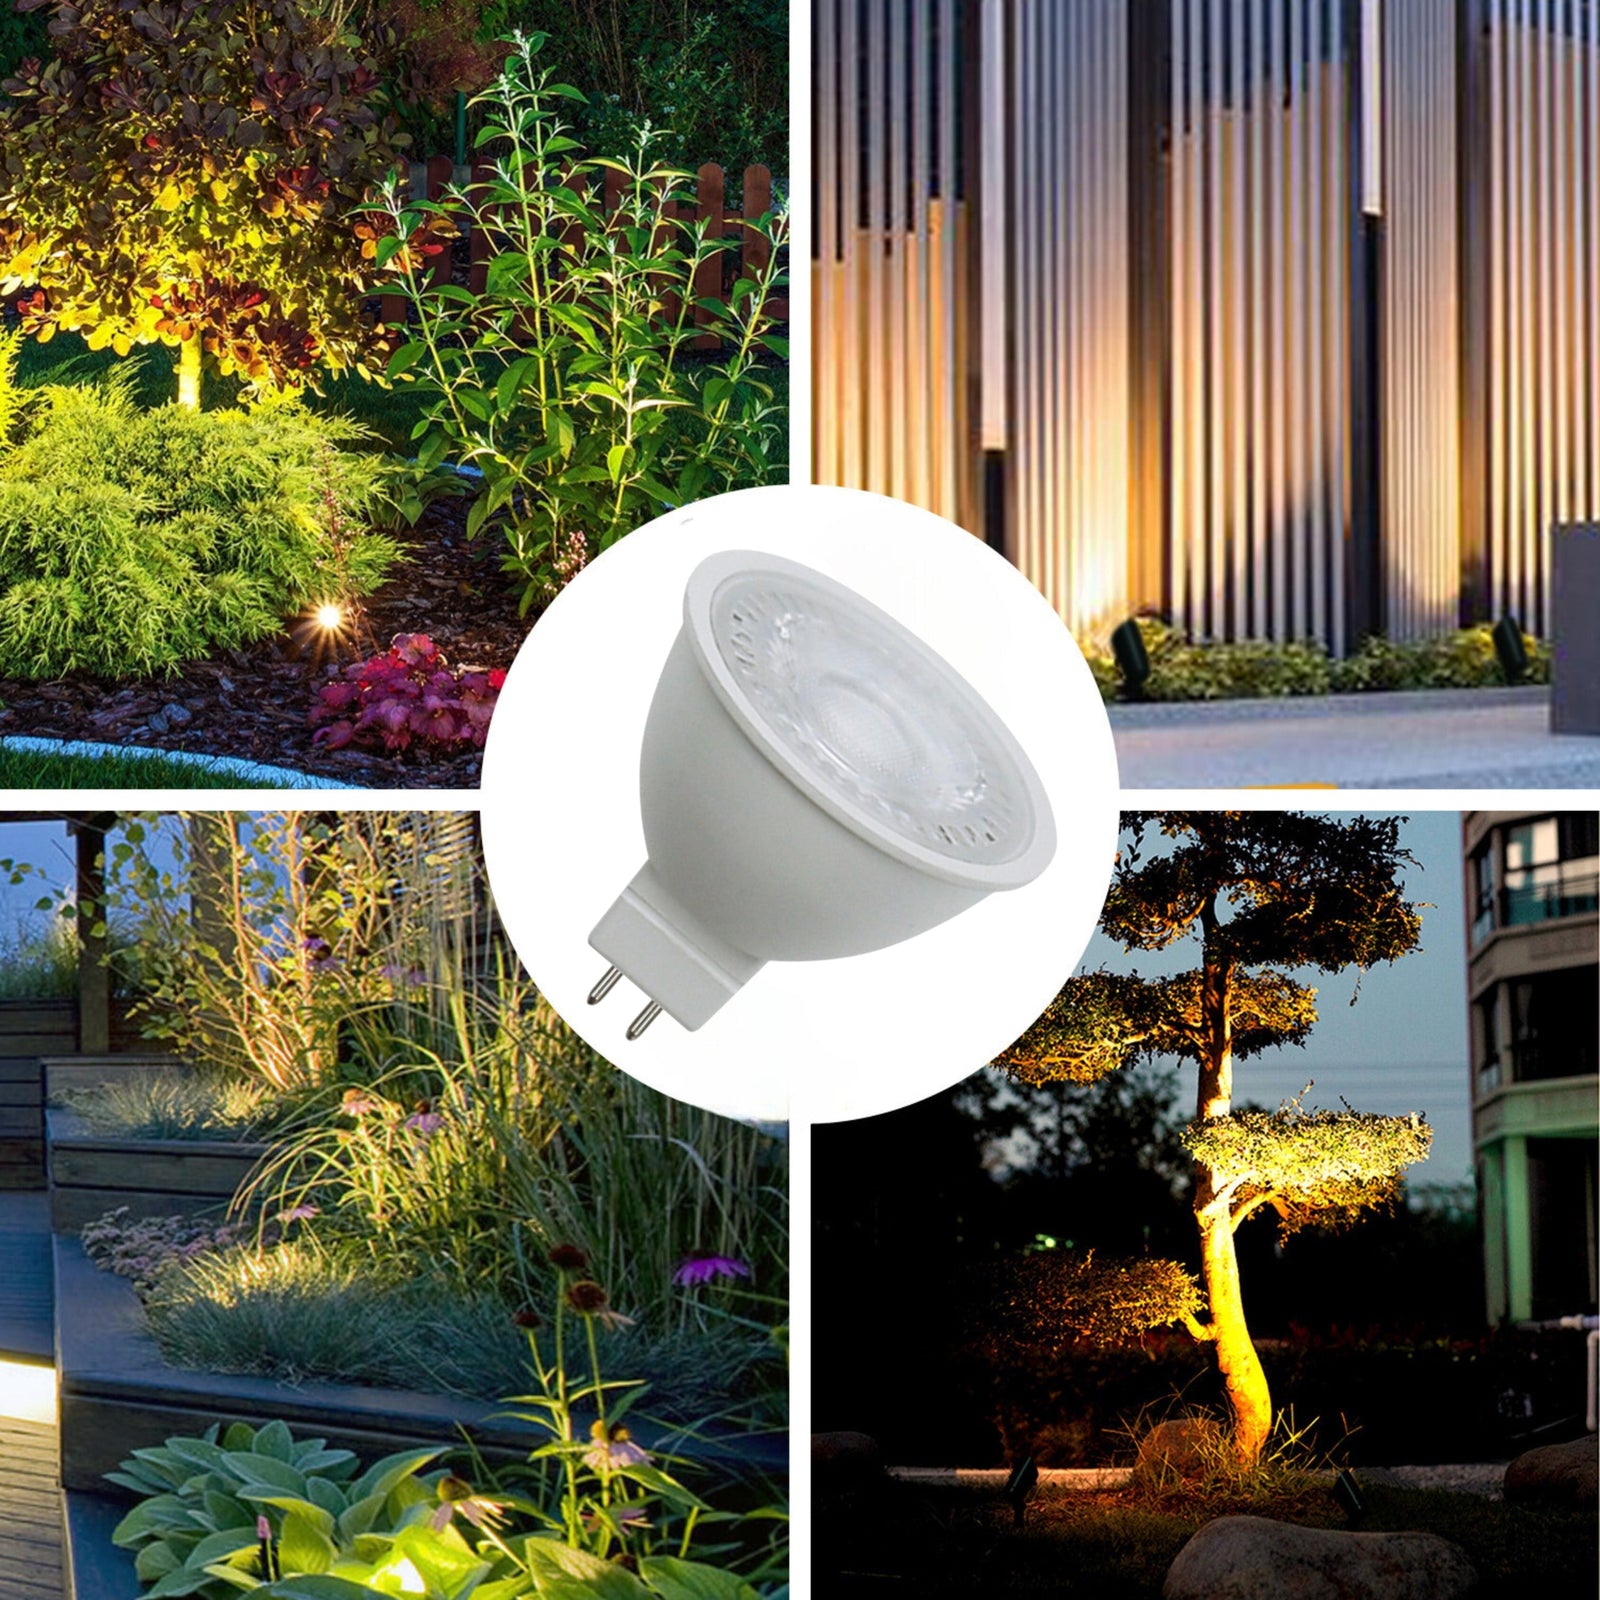 Lumina Lighting® MR16 5W LED Bulb | 5W Bi-Pin Landscape LED Light | 12V 3000K Warm White, 560 Lumens | (10-Pack)